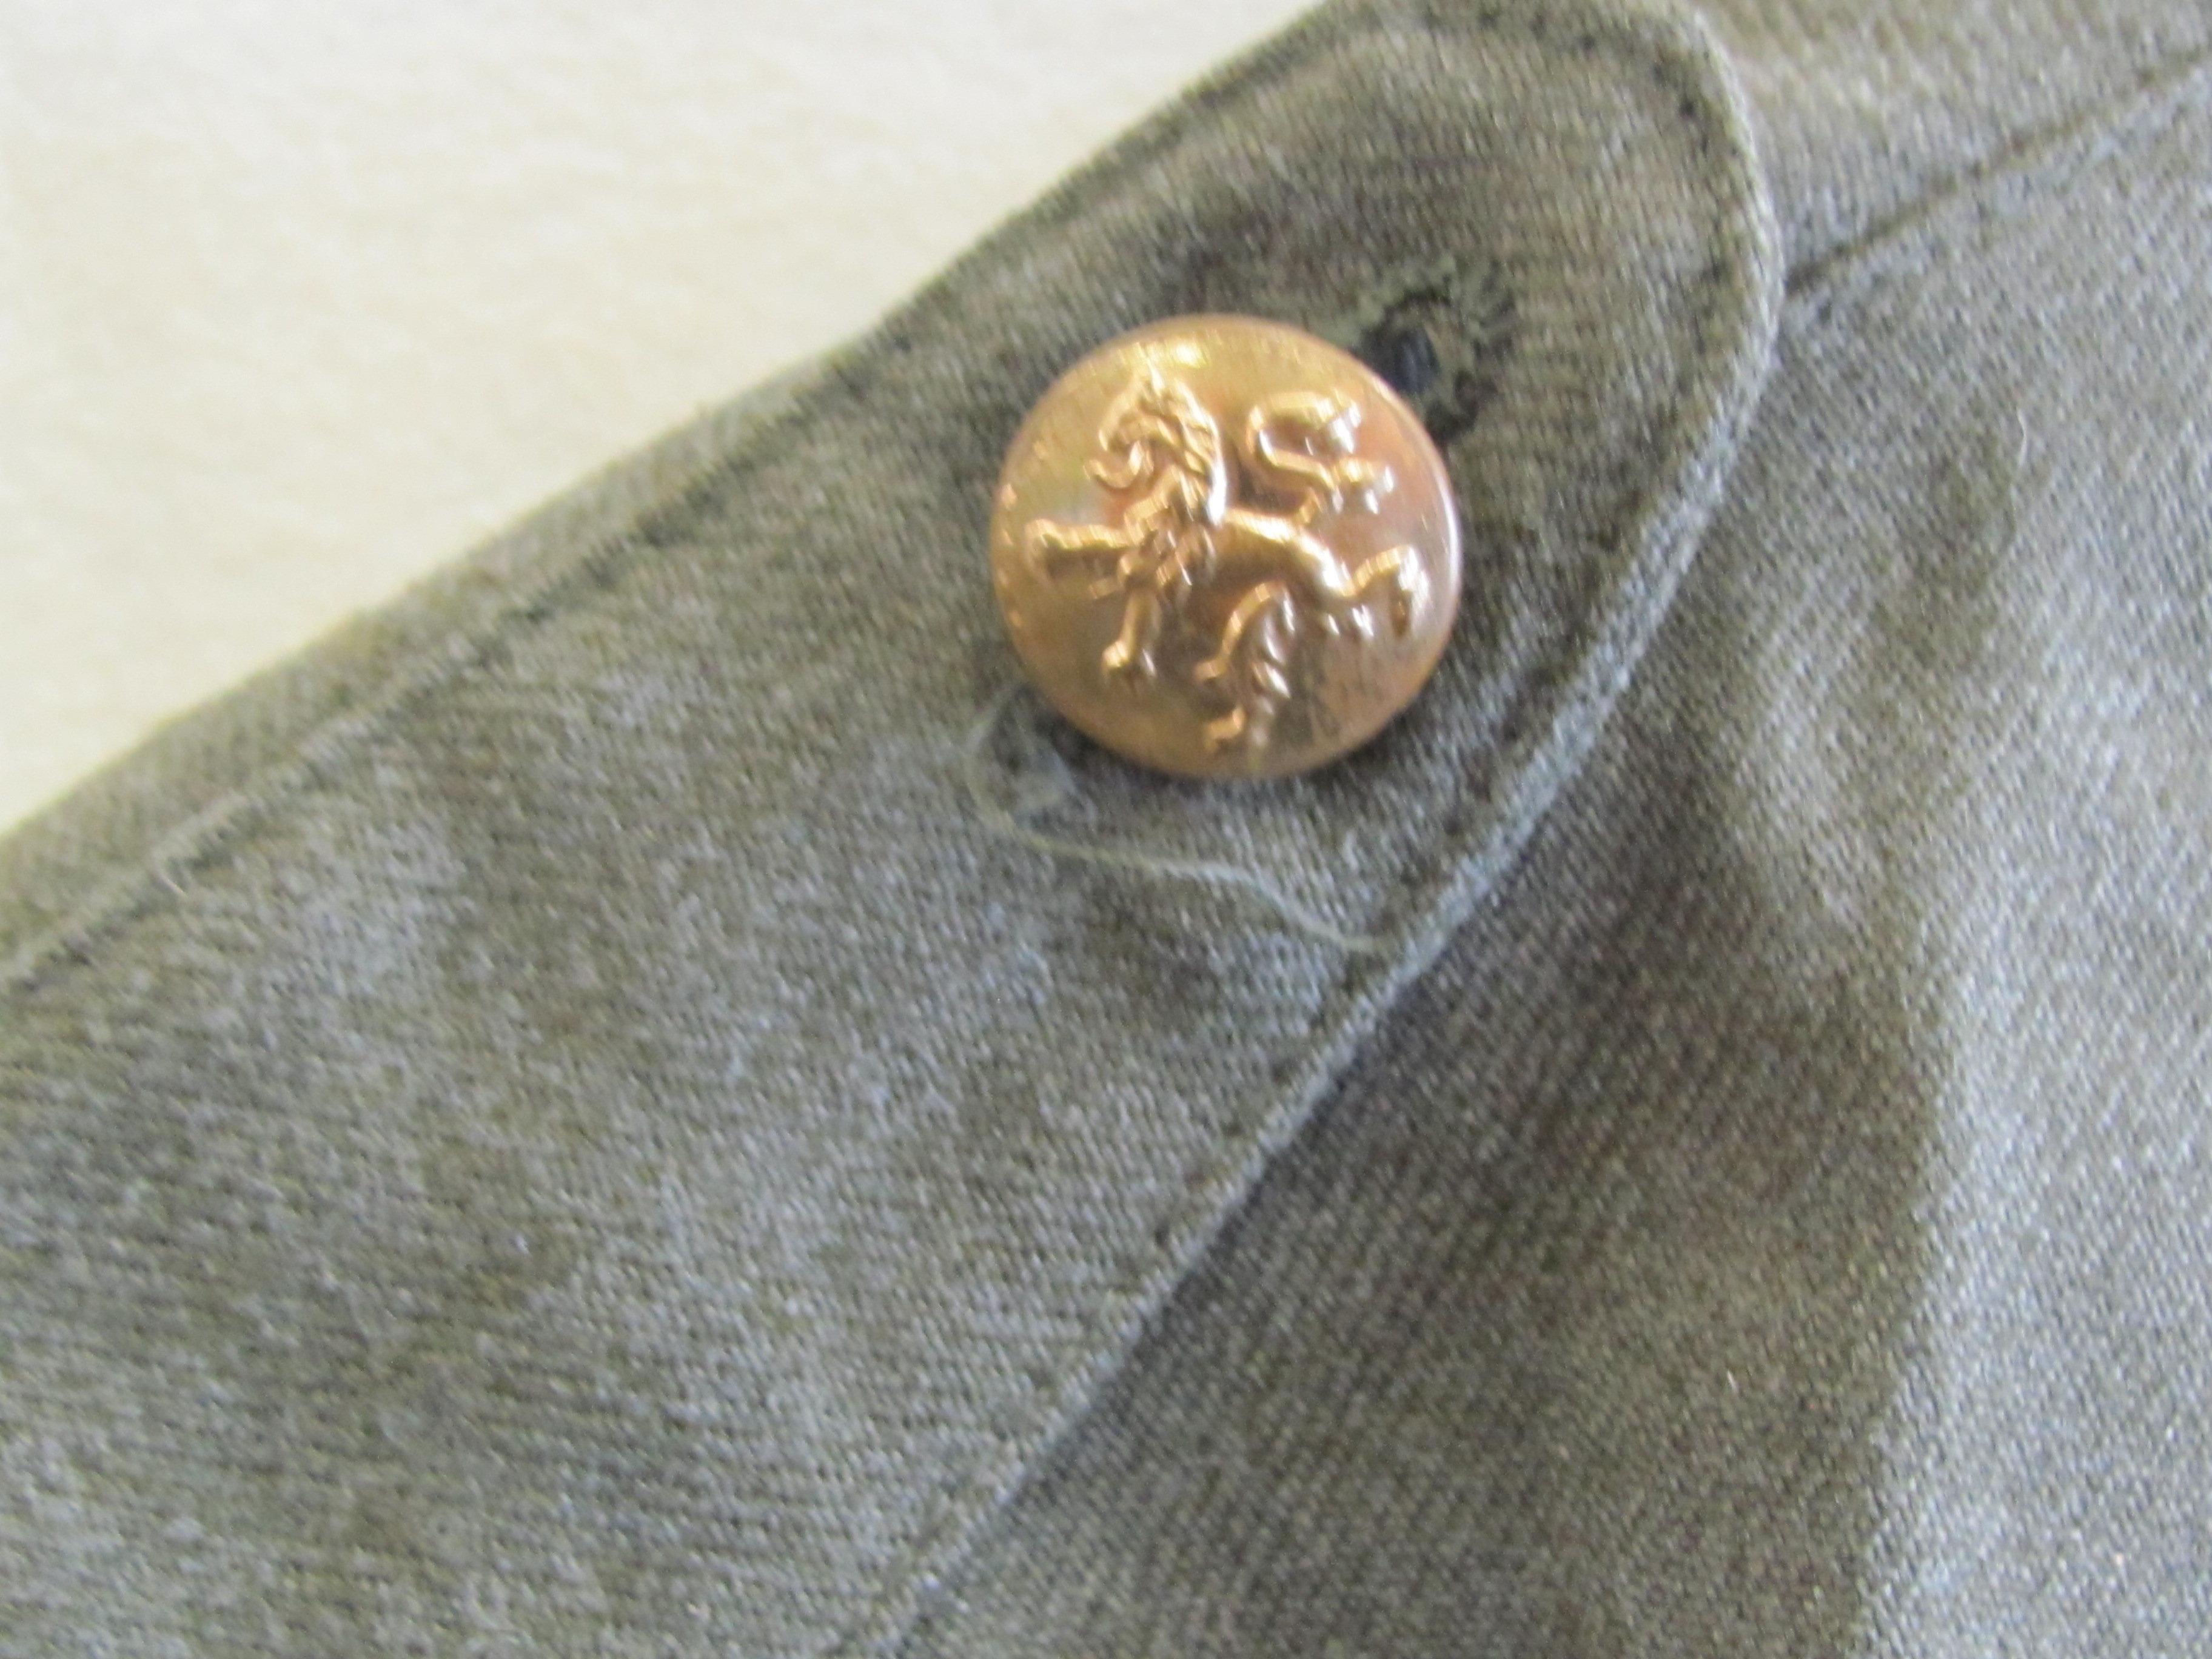 Men's Jacket – Size Medium? - Marked “Mfg. Holland Wool” - Drab-Olive Green/Gray -